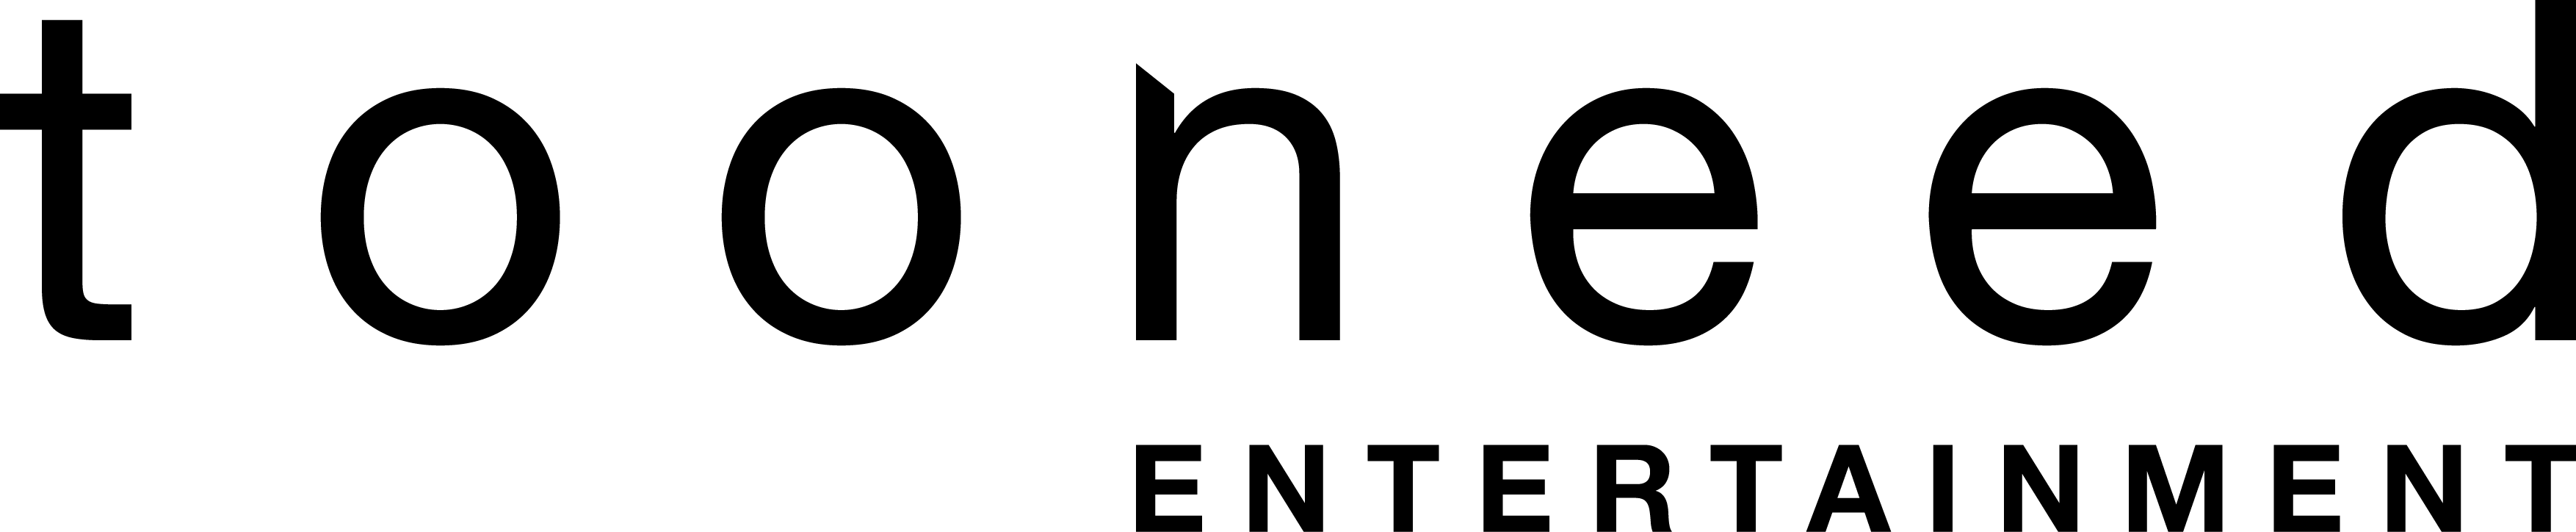 Tooneed Entertainment logo image